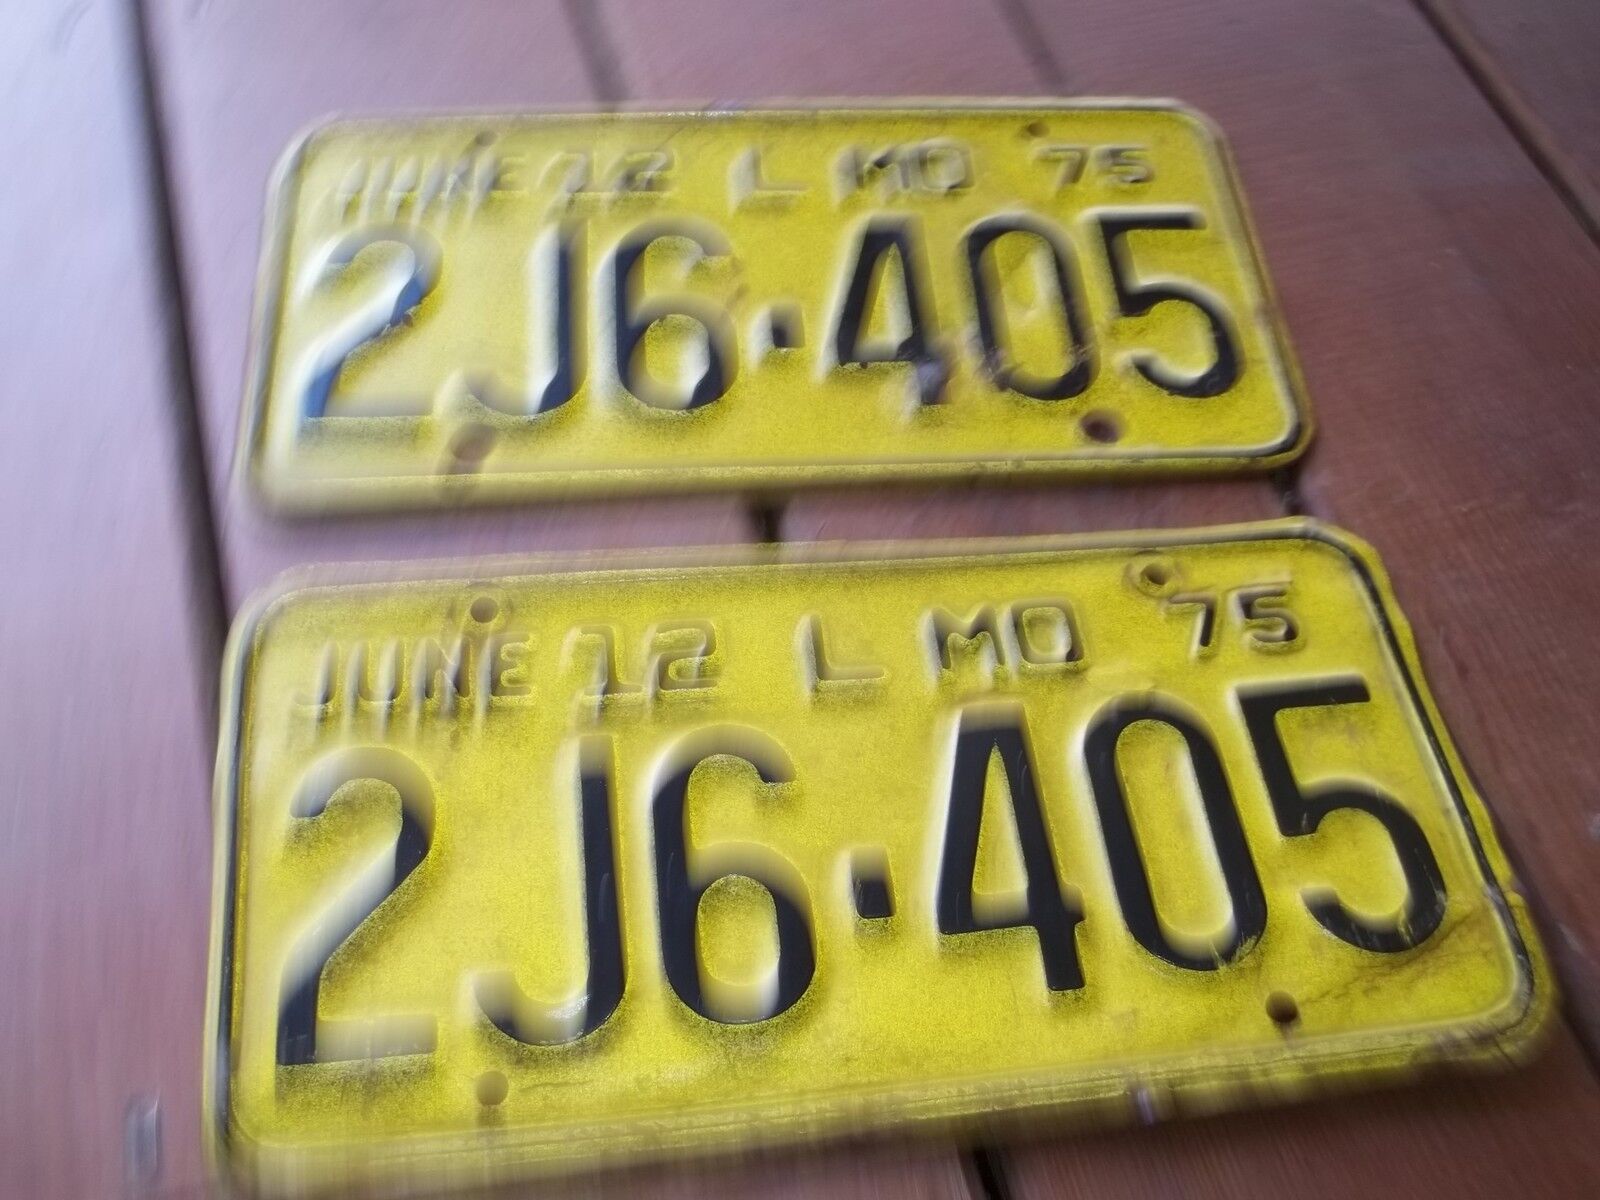 JUNE 12 L MO 1975 Missouri 2J6 405 License Plate Pair